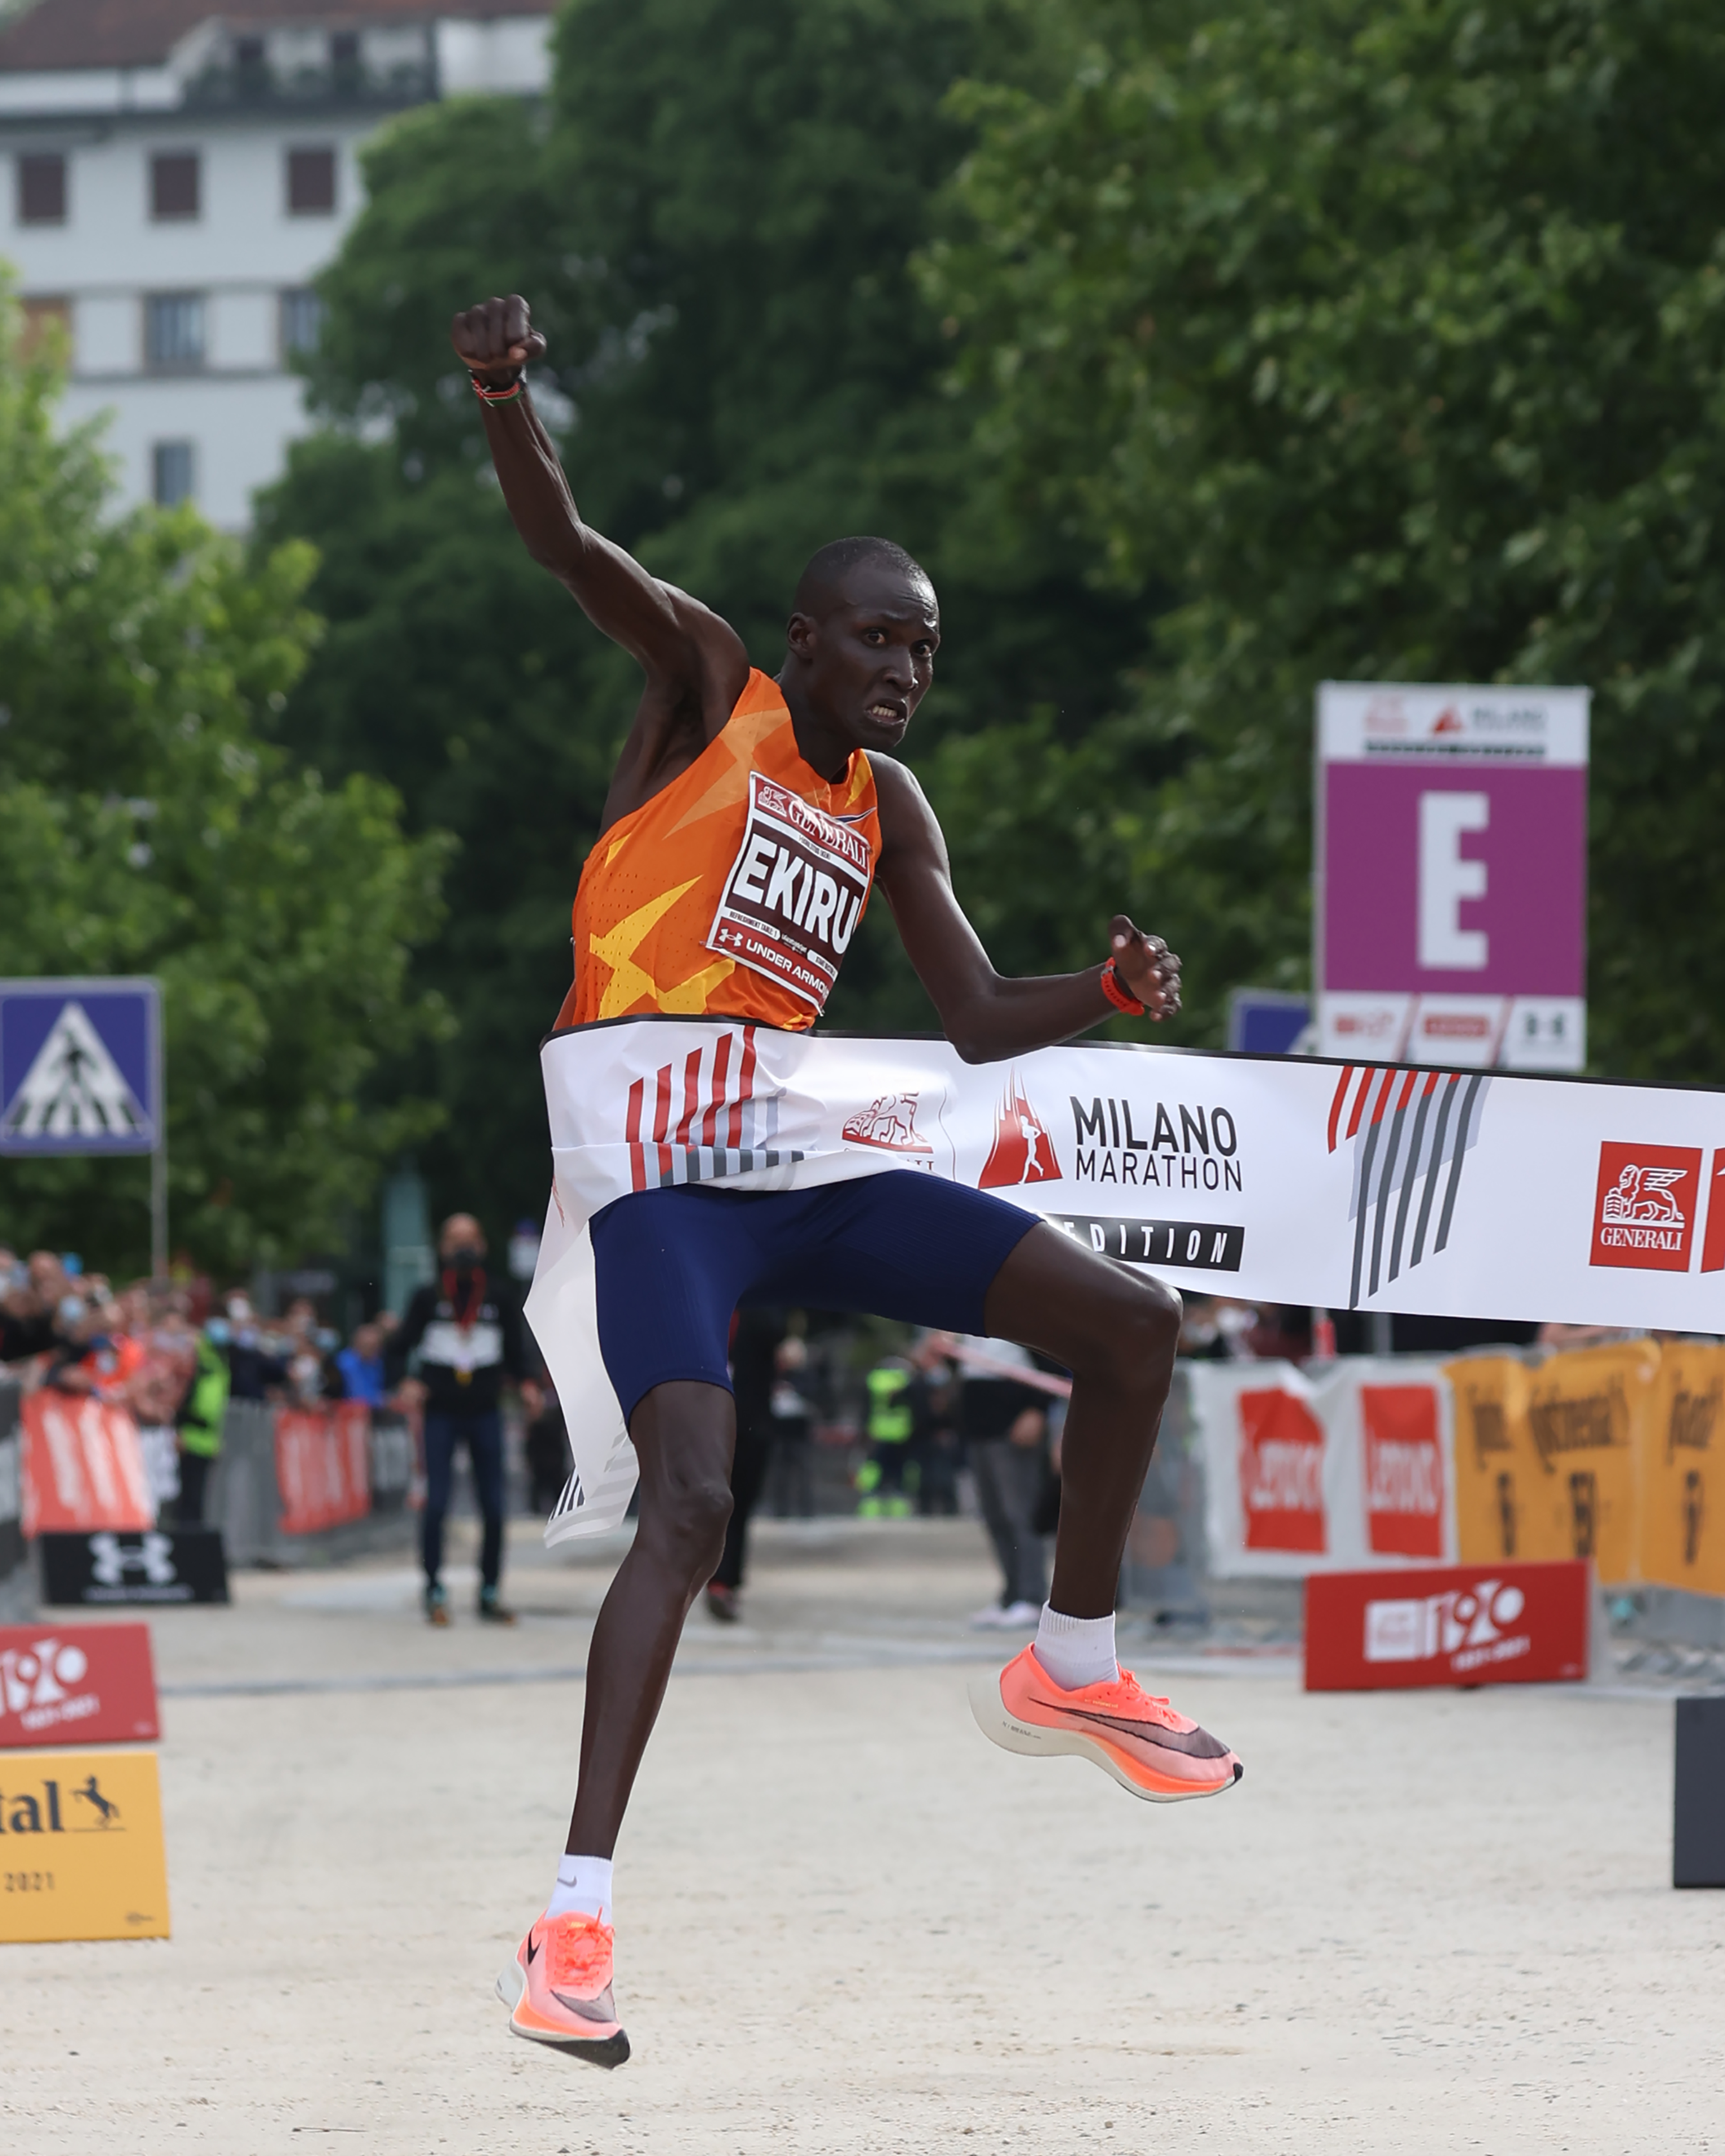 World’s Fastest Man Of 2021 To Participate At The ADNOC Abu Dhabi Marathon